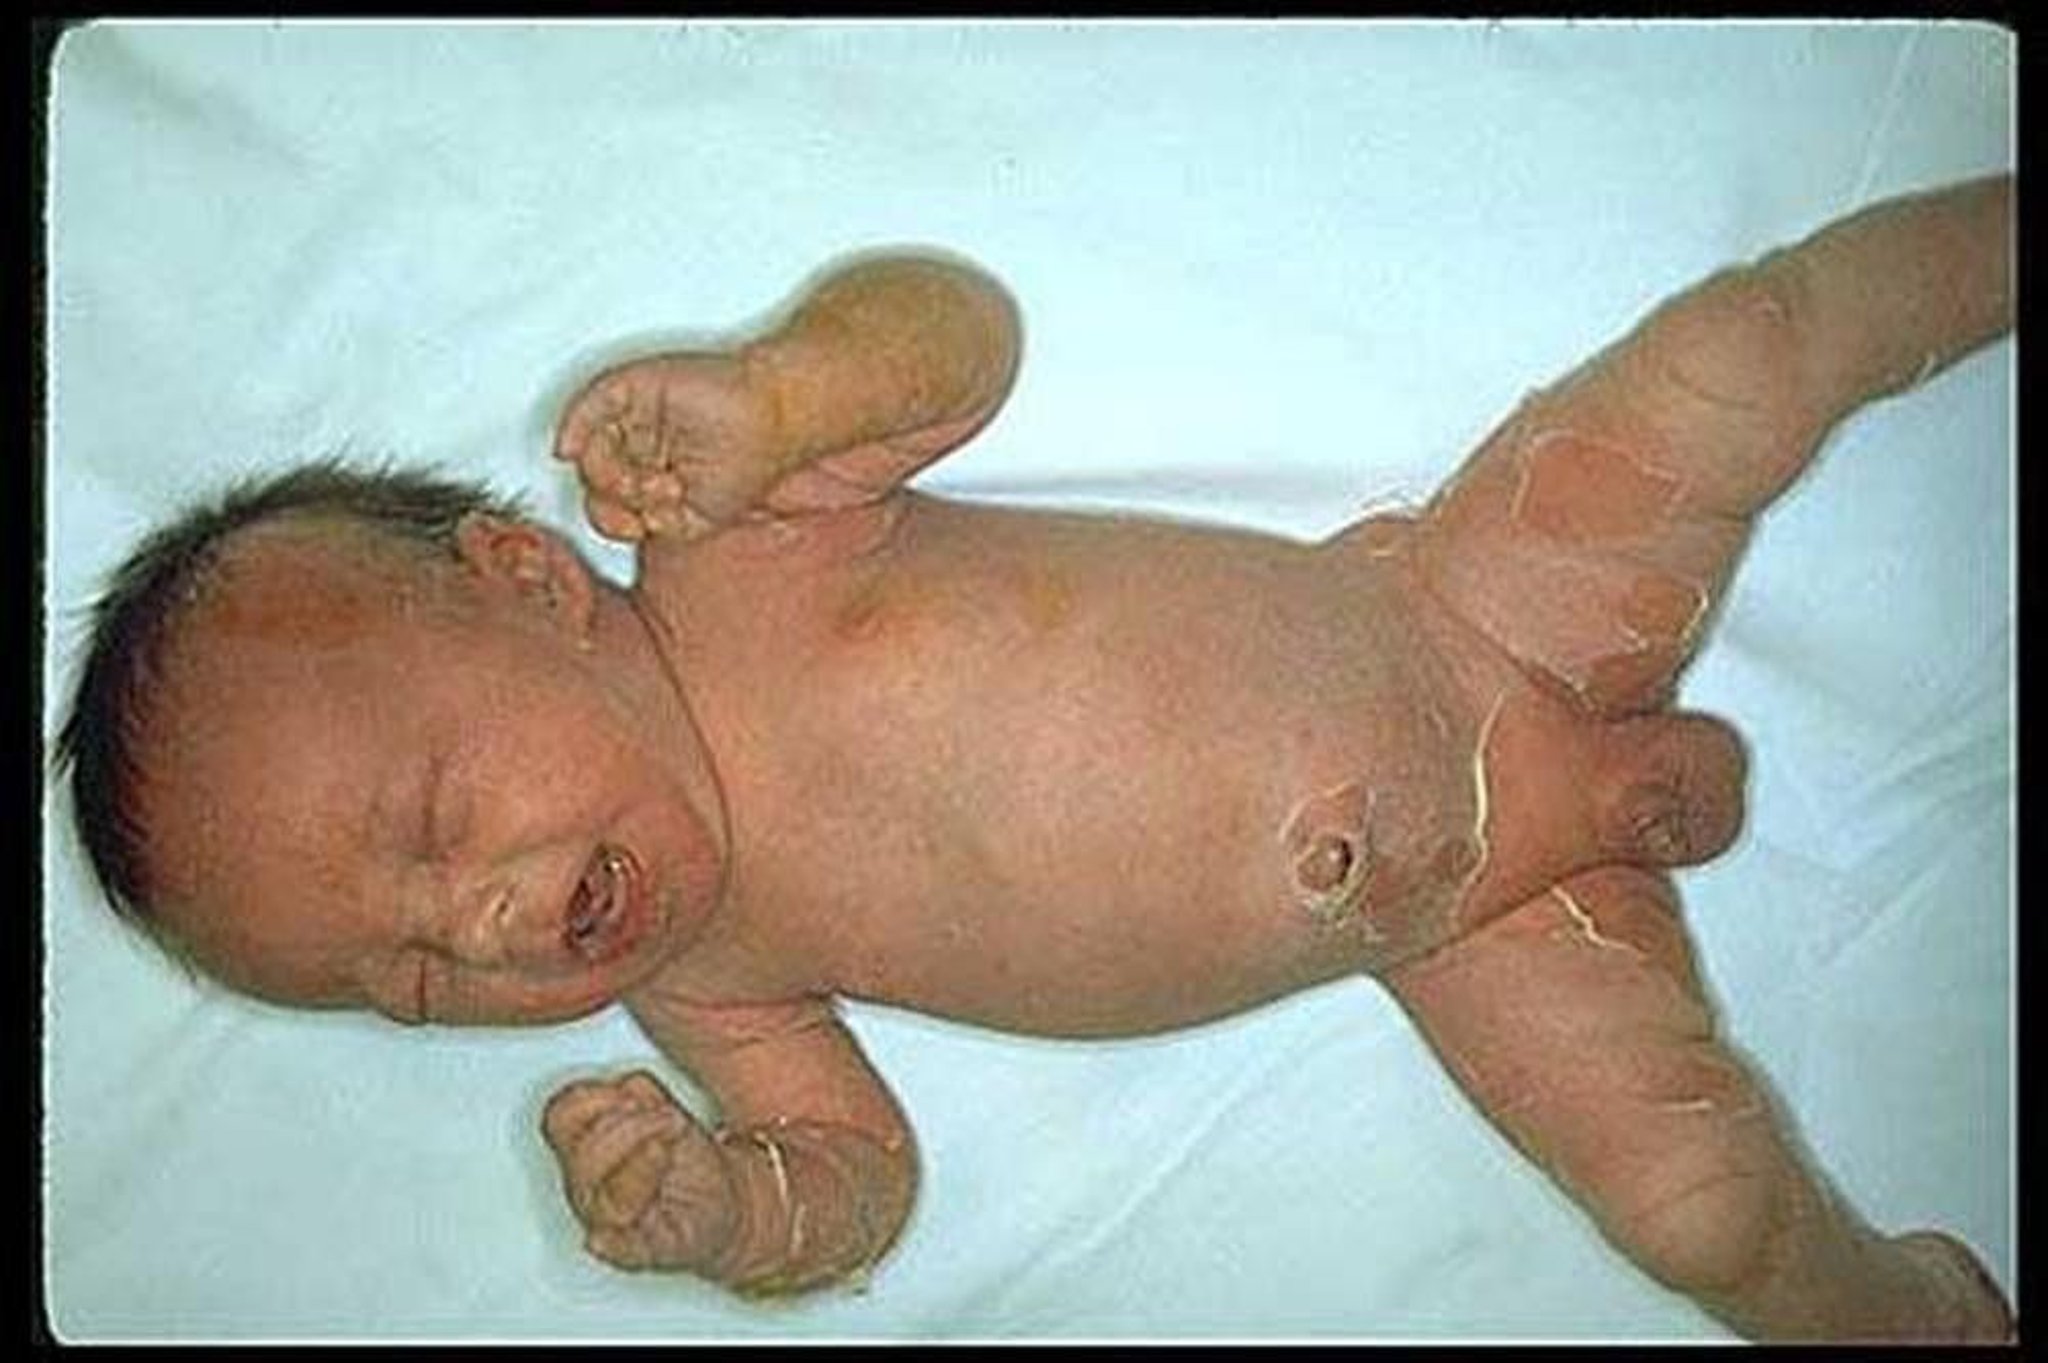 Staphylococcal Scalded Skin Syndrome (Infant)